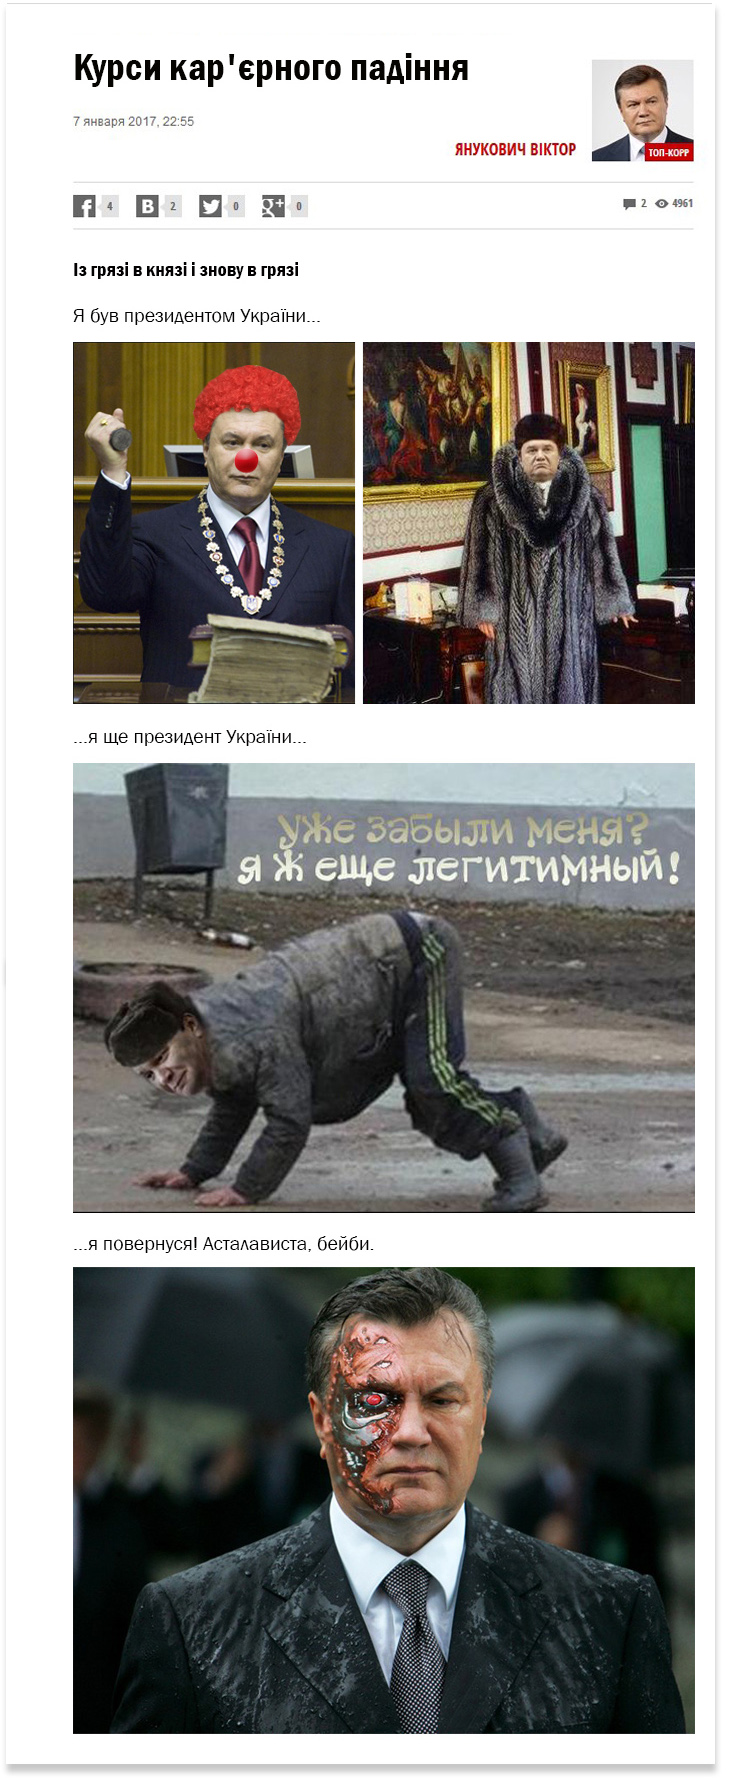 Як спекти золотий батон: блог Януковича у ФОТОЖАБАХ - фото 4